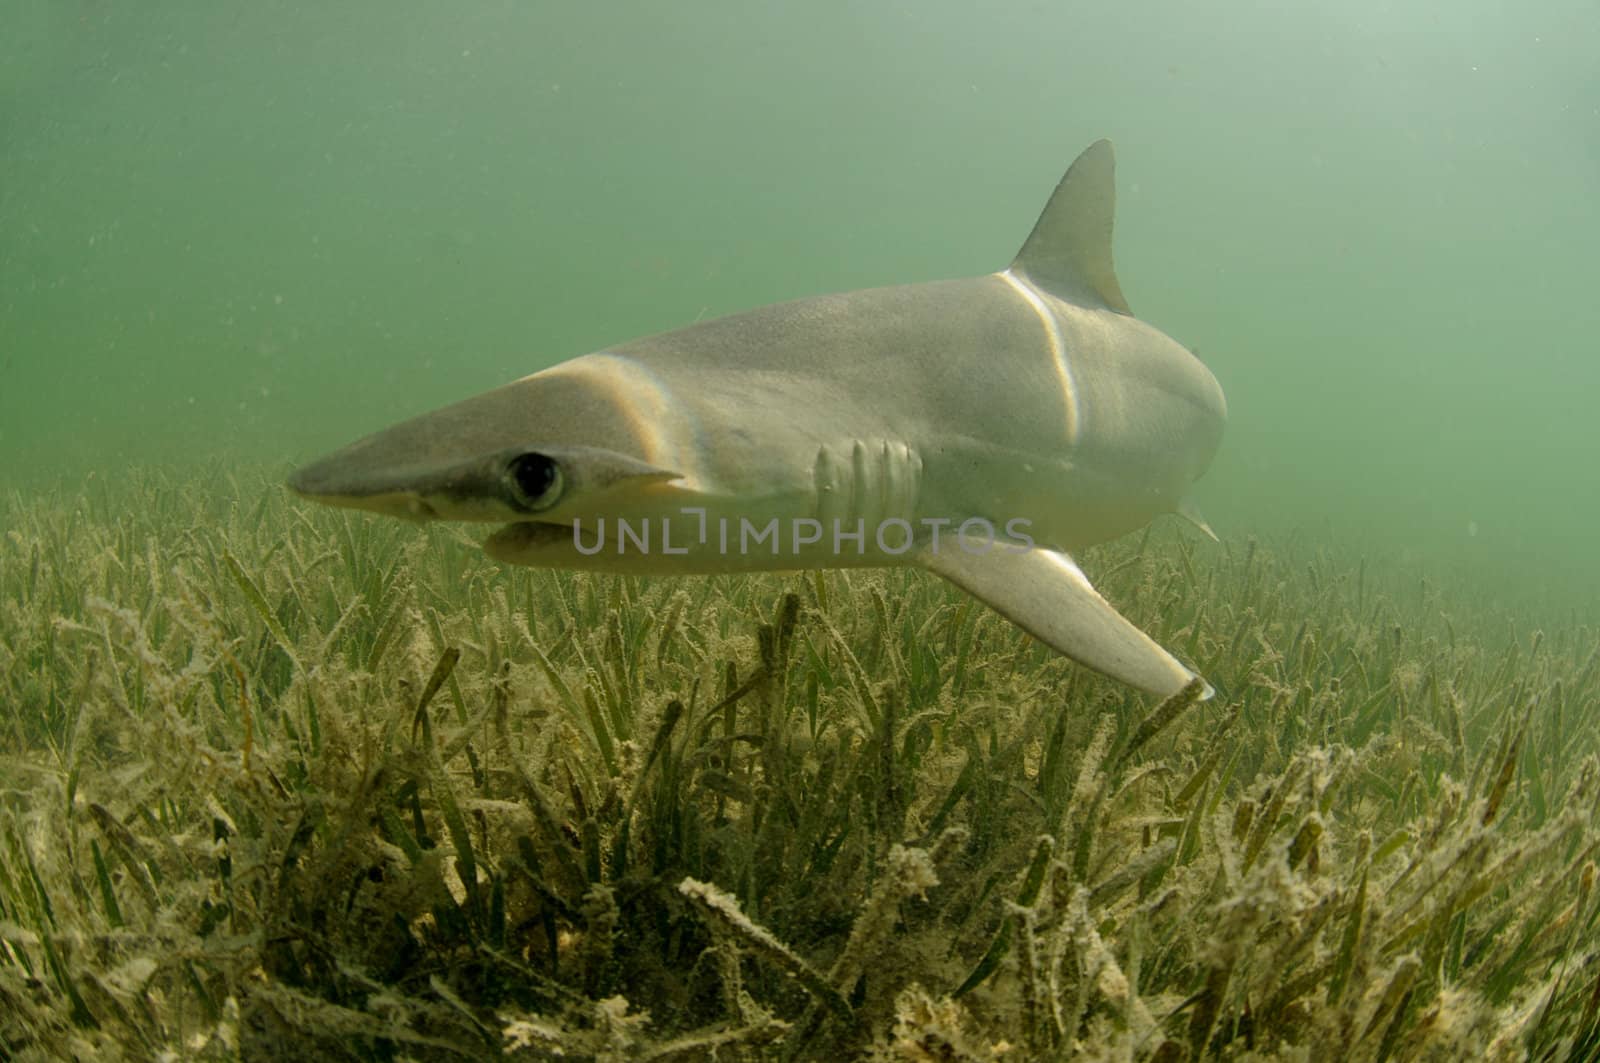 Bonnethead shark swimming in ocean in natural habitat